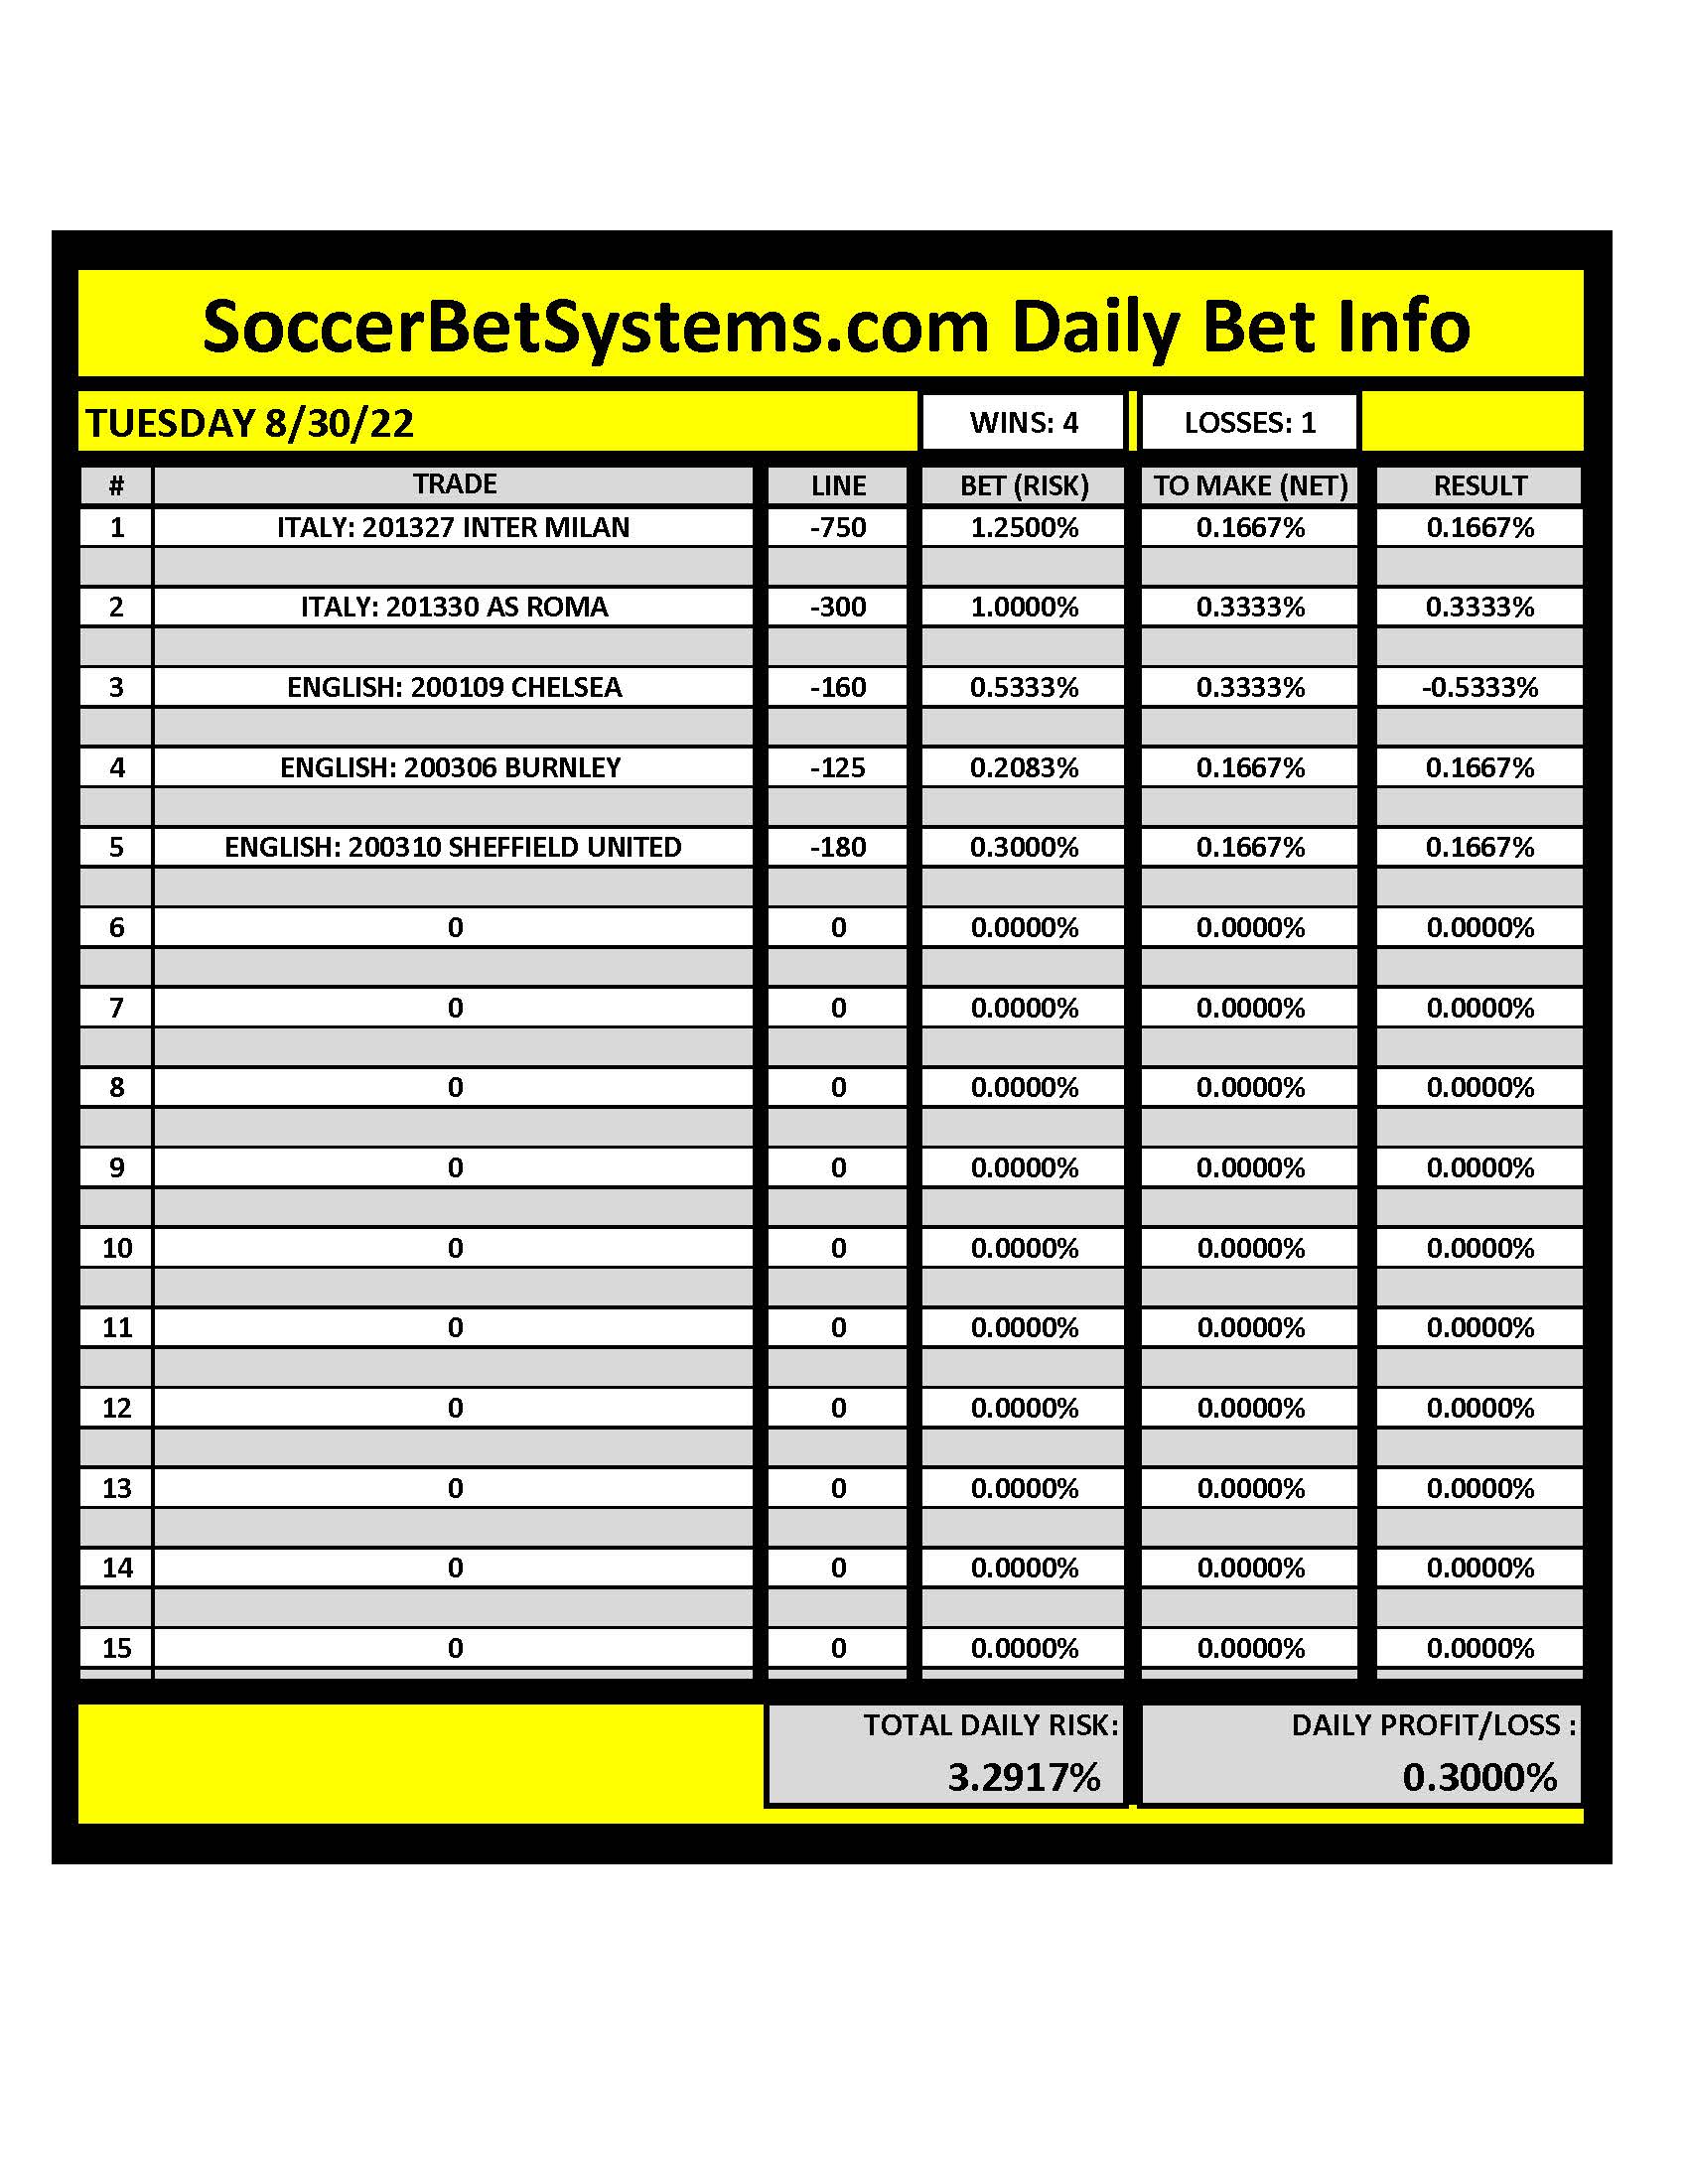 SoccerBetSystems.com 8/30/22 Daily Results